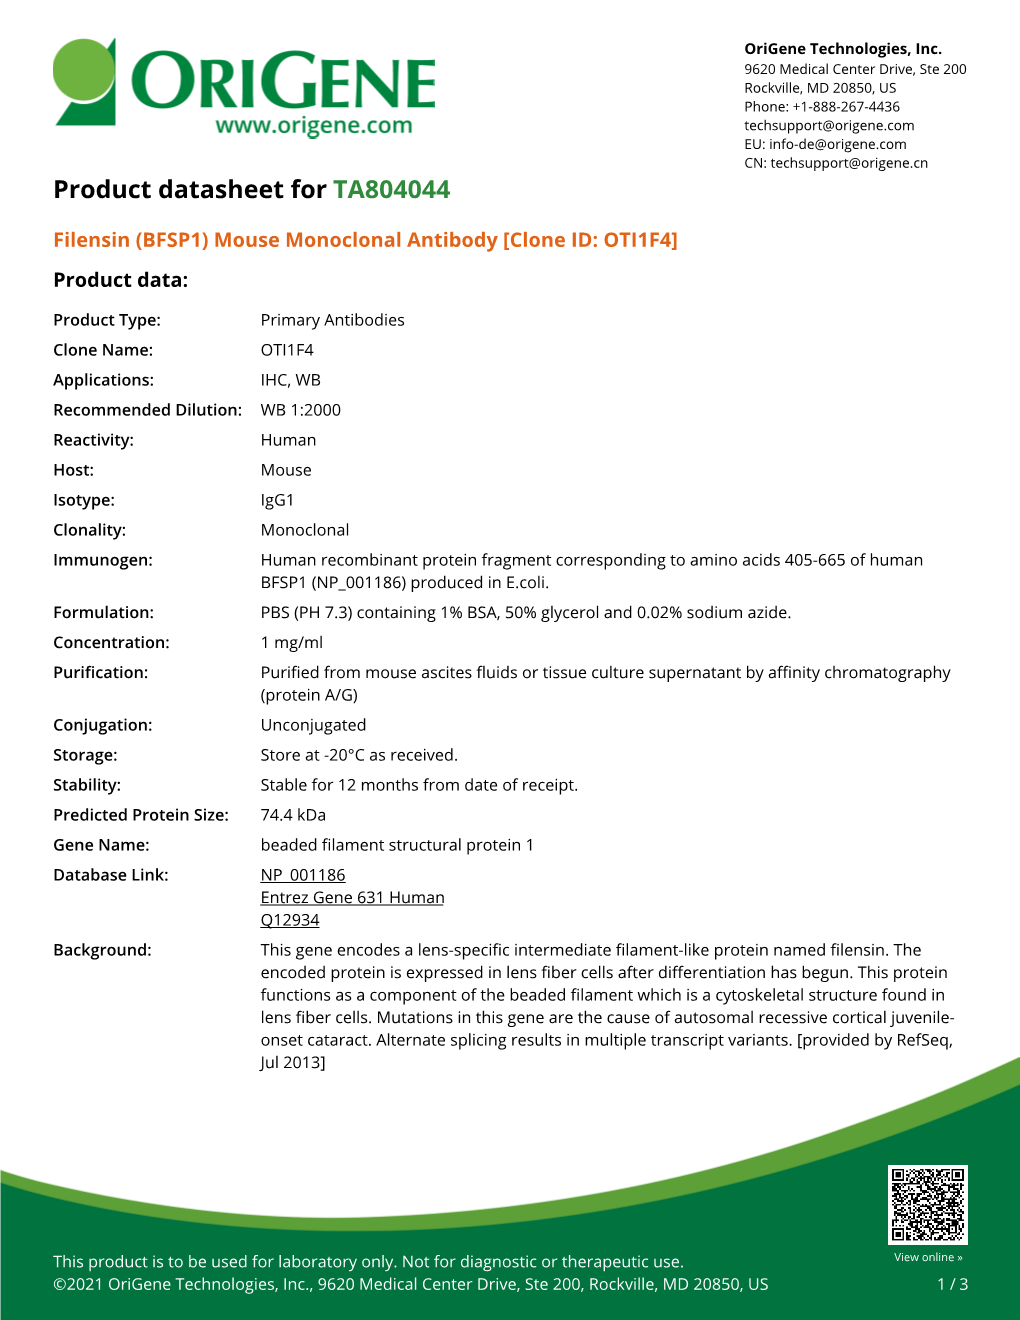 Filensin (BFSP1) Mouse Monoclonal Antibody [Clone ID: OTI1F4] Product Data